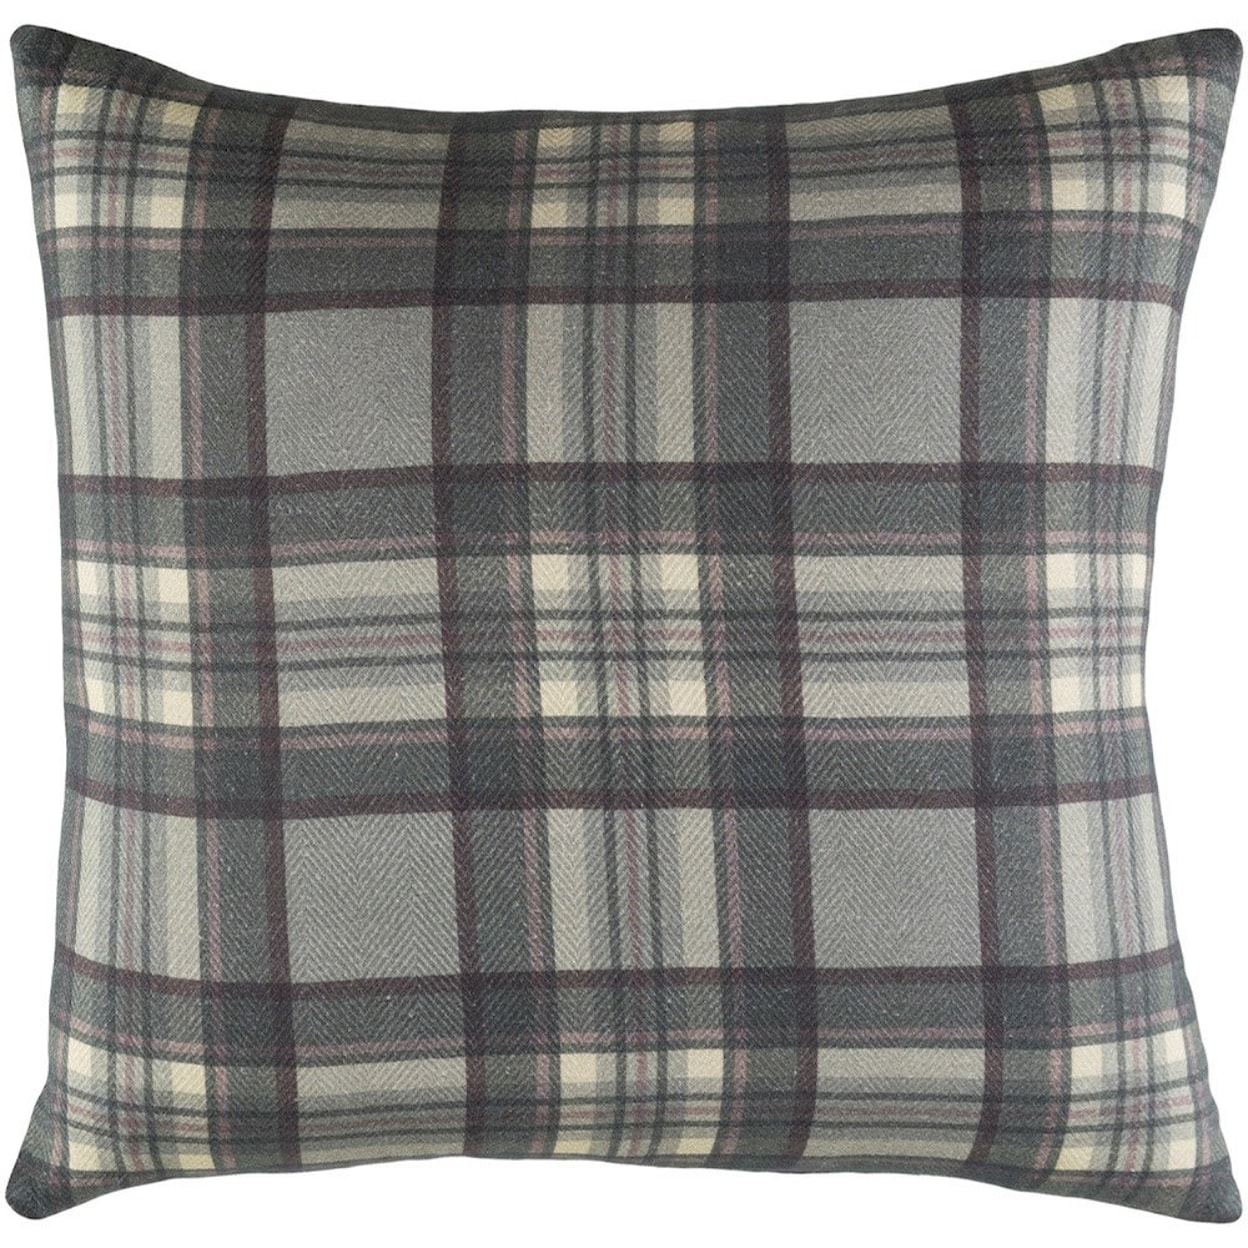 Ruby-Gordon Accents Brigadoon 22 x 22 x 5 Polyester Pillow Kit